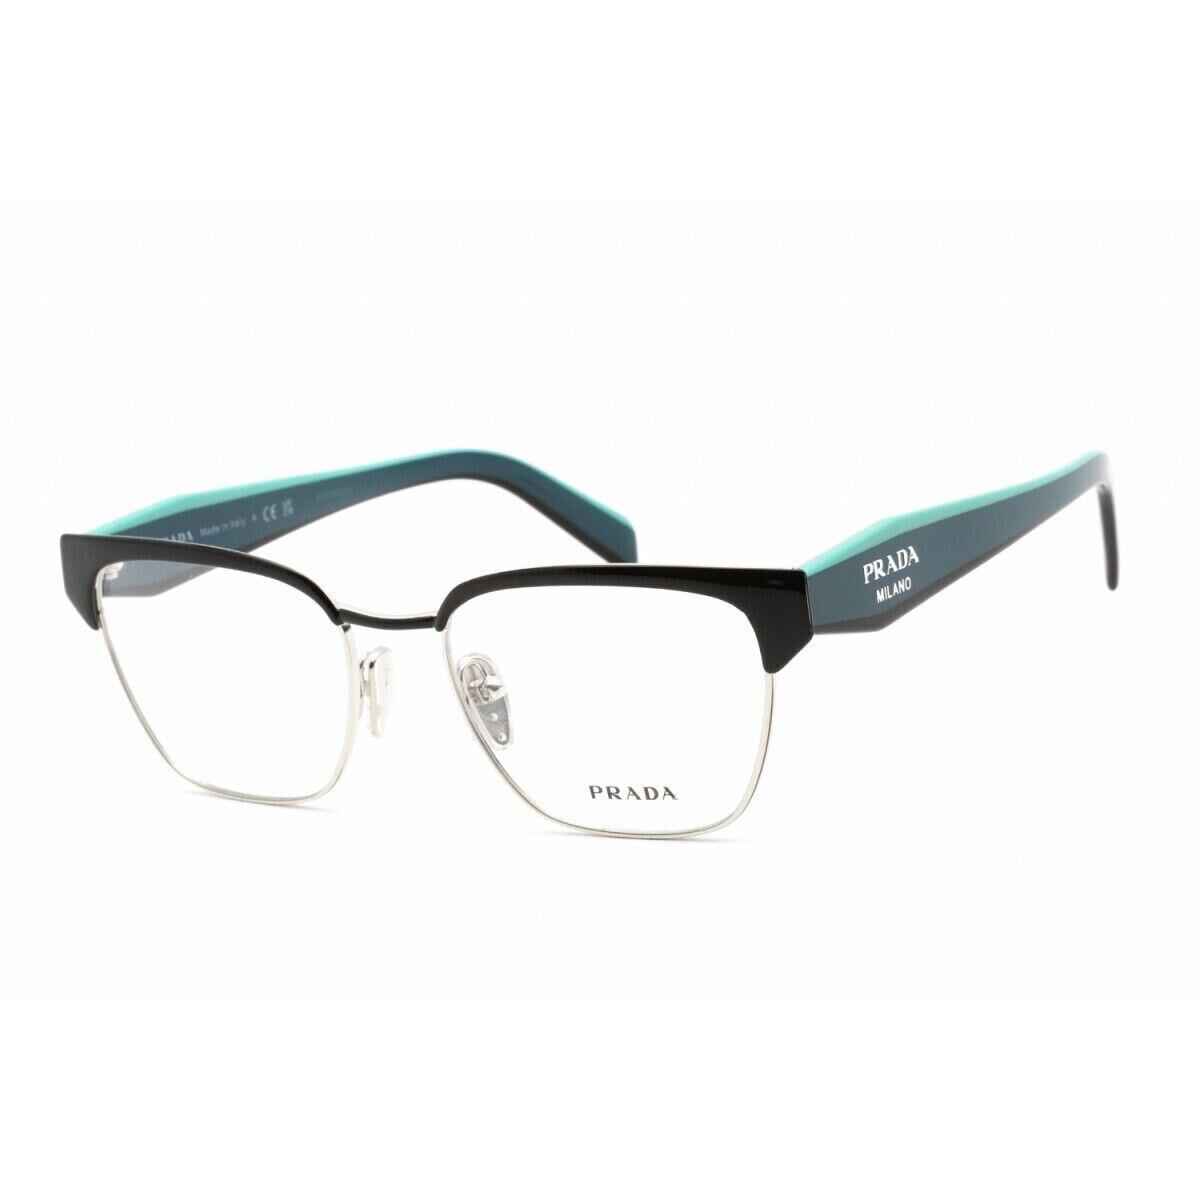 Prada Eyeglasses VPR65Y GAQ-1O1 Black Silver Full Rim Frame 53MM Rx-able - Frame: Black Silver